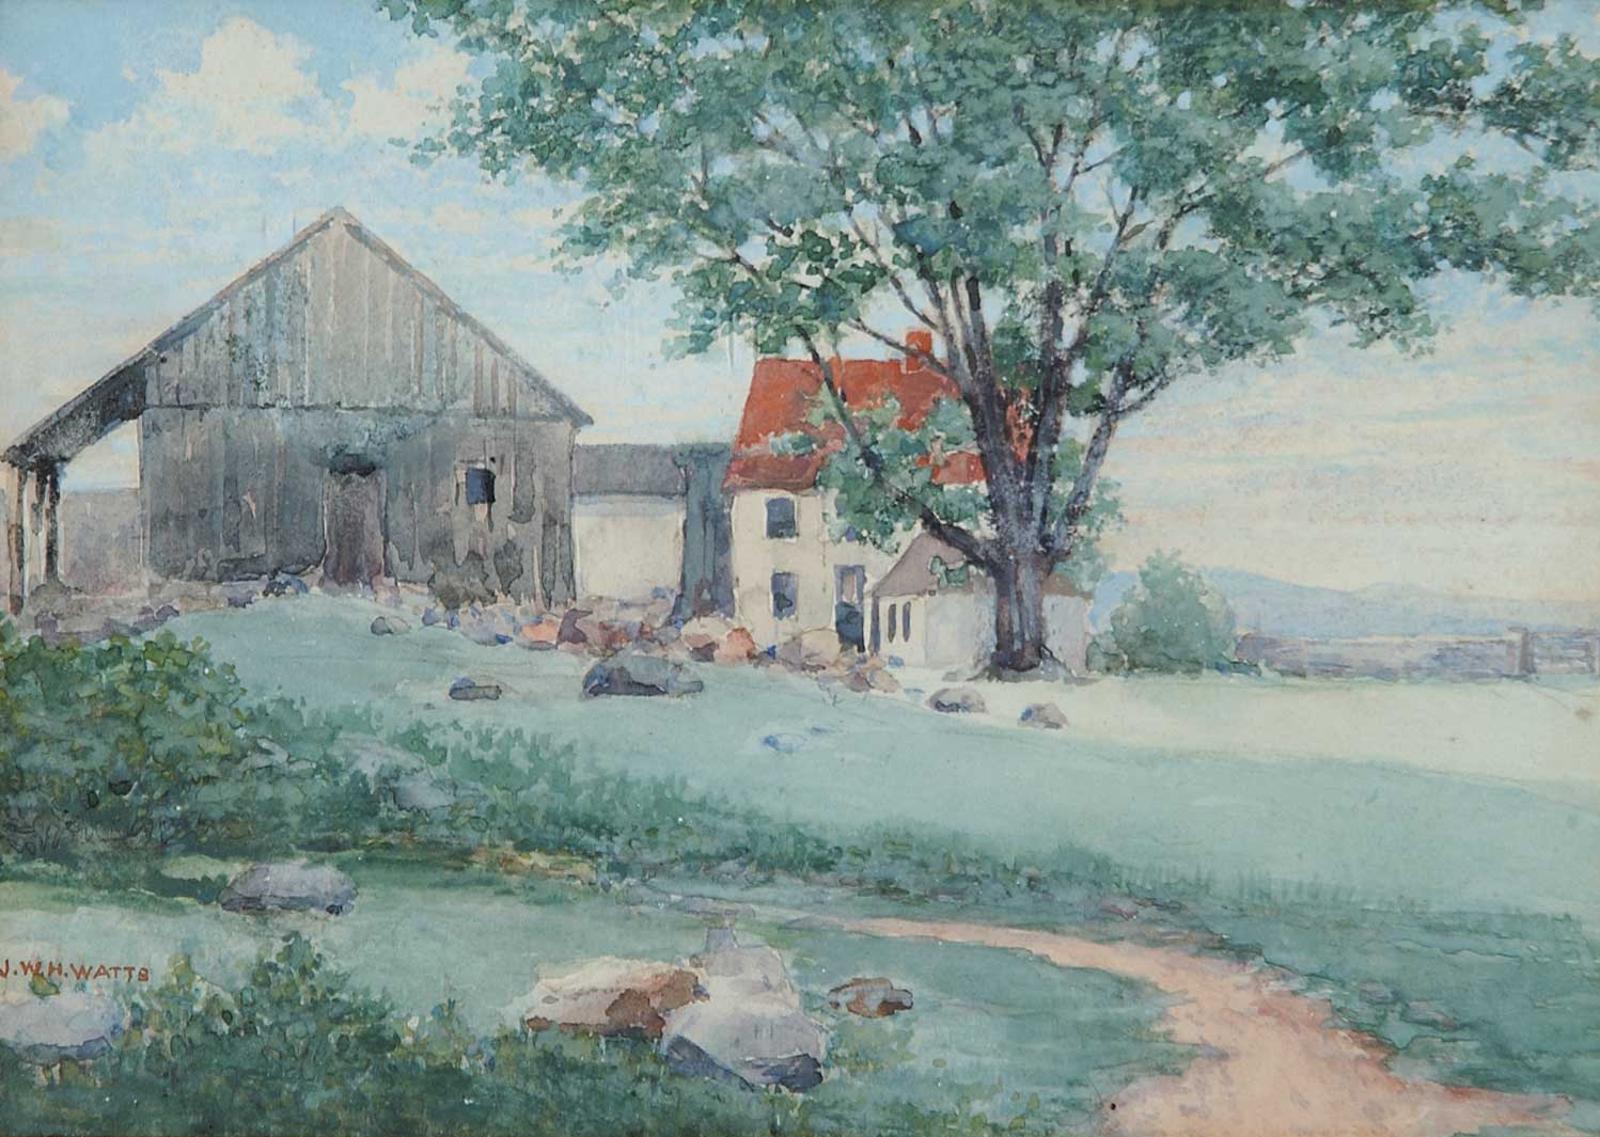 John William Hurrell Watts (1850-1917) - Untitled - Rural Ontario